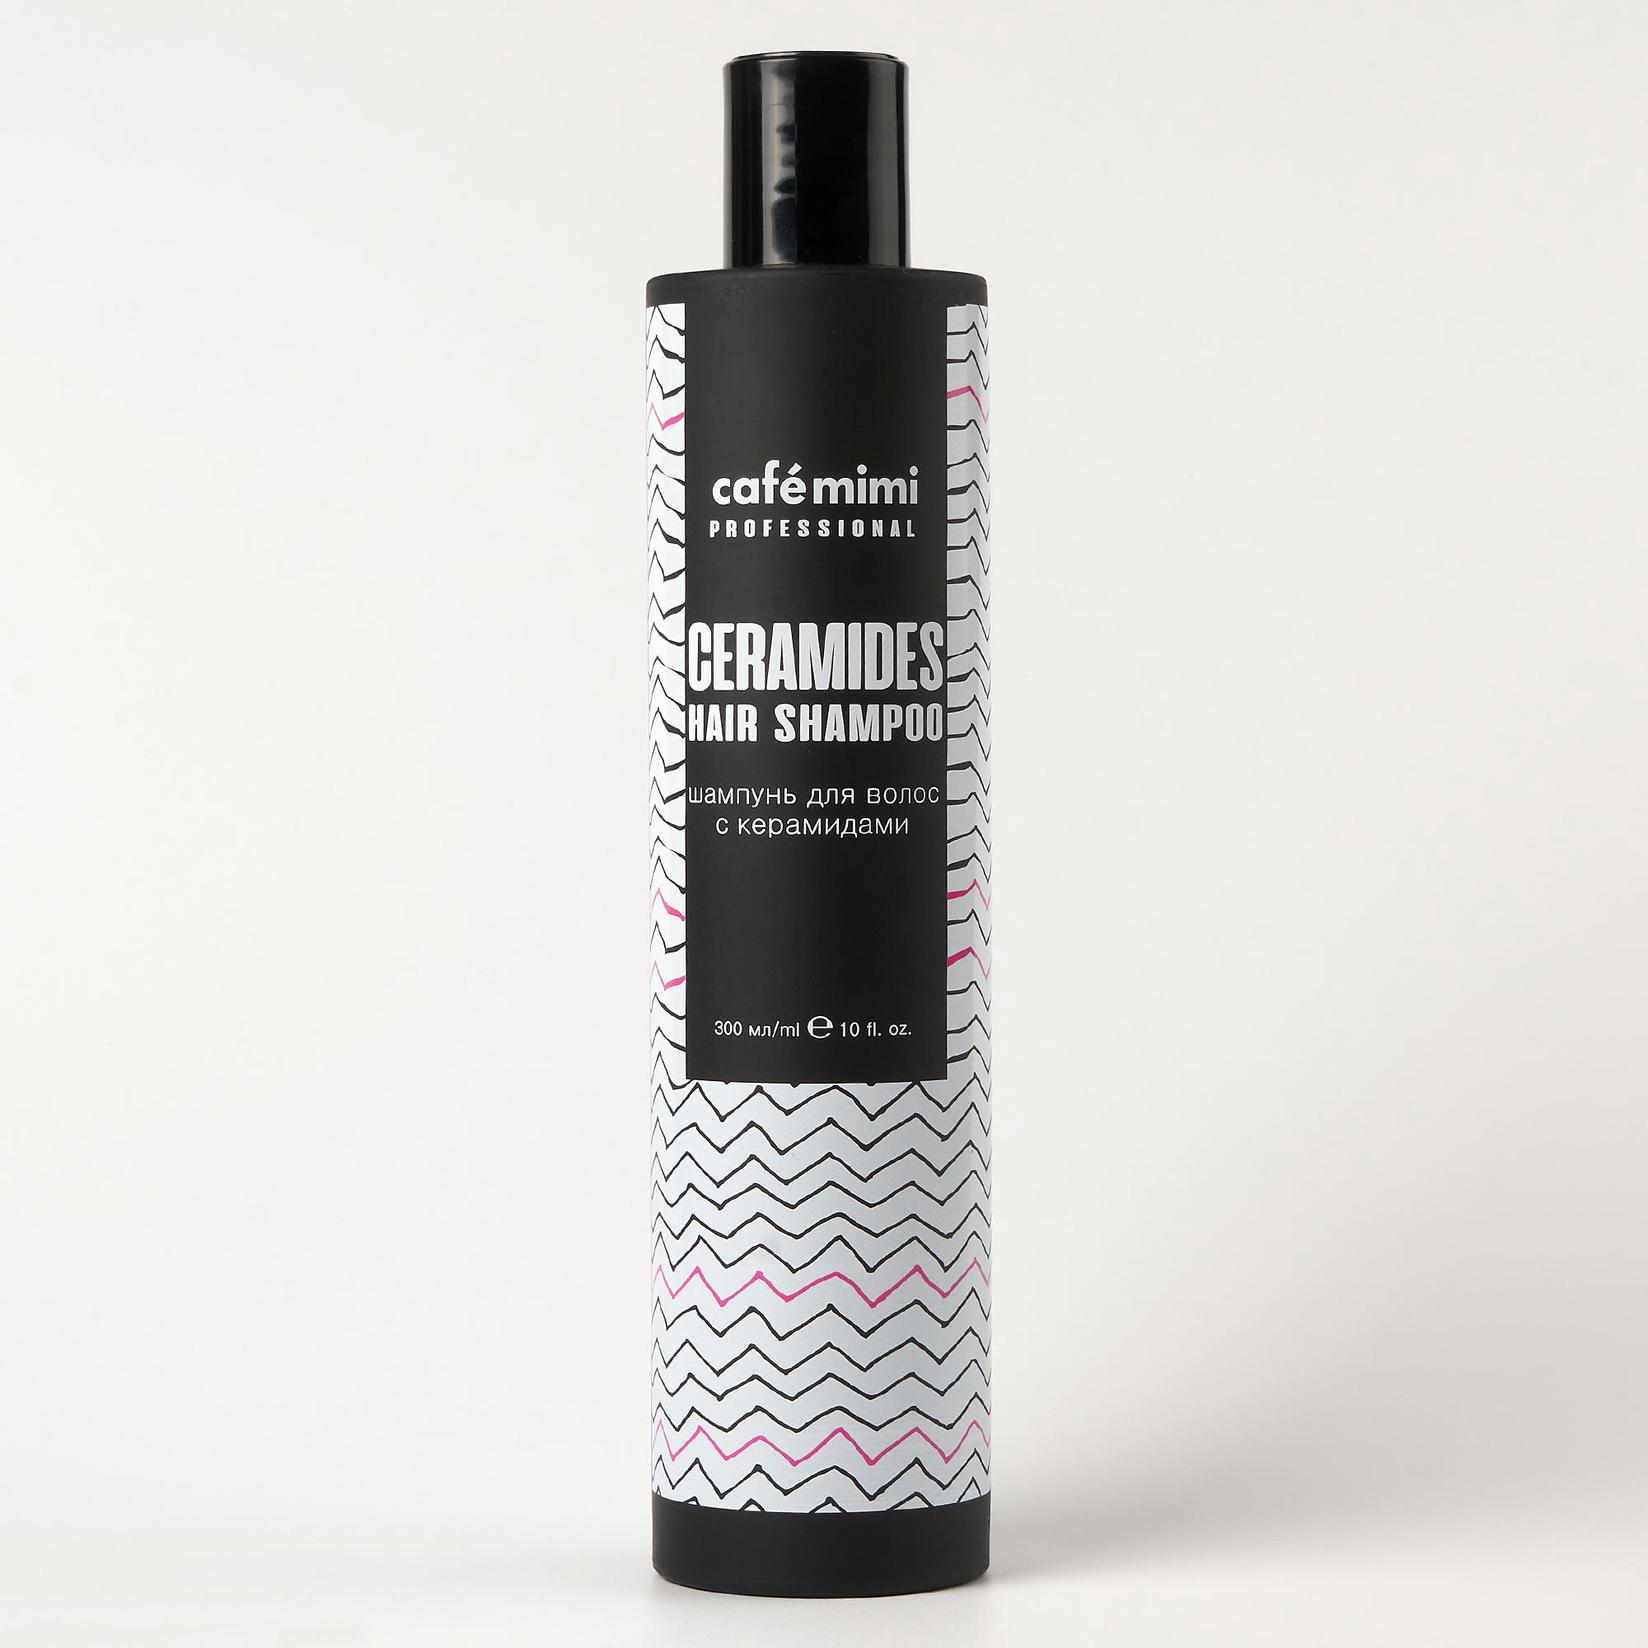 CAFEMIMI Шампон за коса PROFESSIONAL церамиди 300 ml